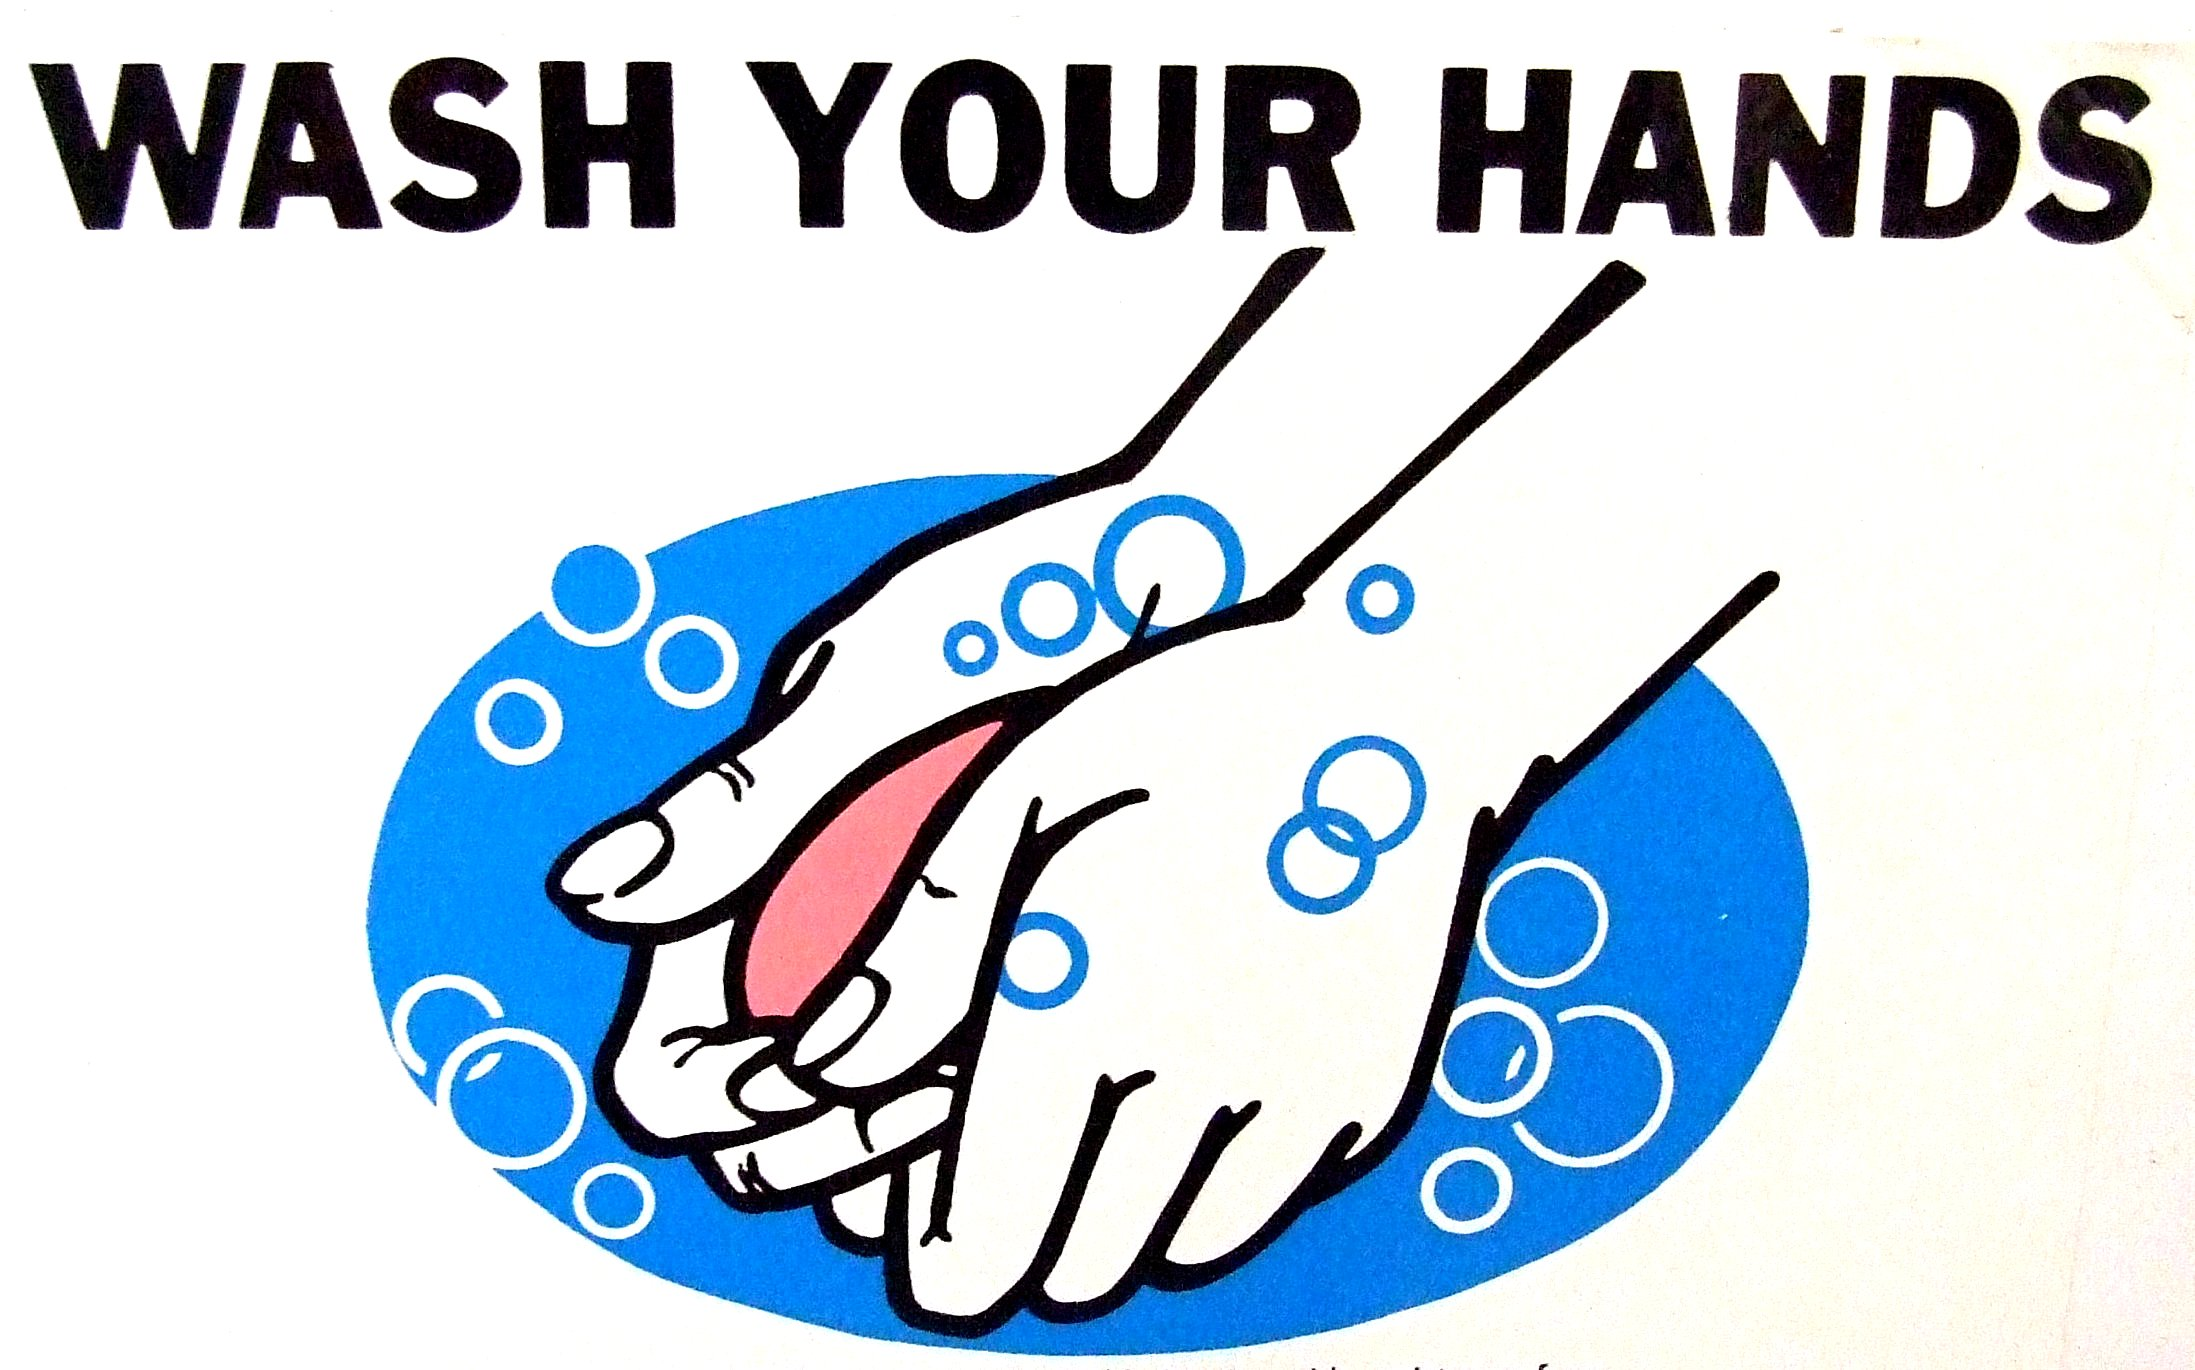 We wash hands. Wash your hands. Картинка Wash your hands. Wash your hands картинка для детей. Wash your hands Flashcards.